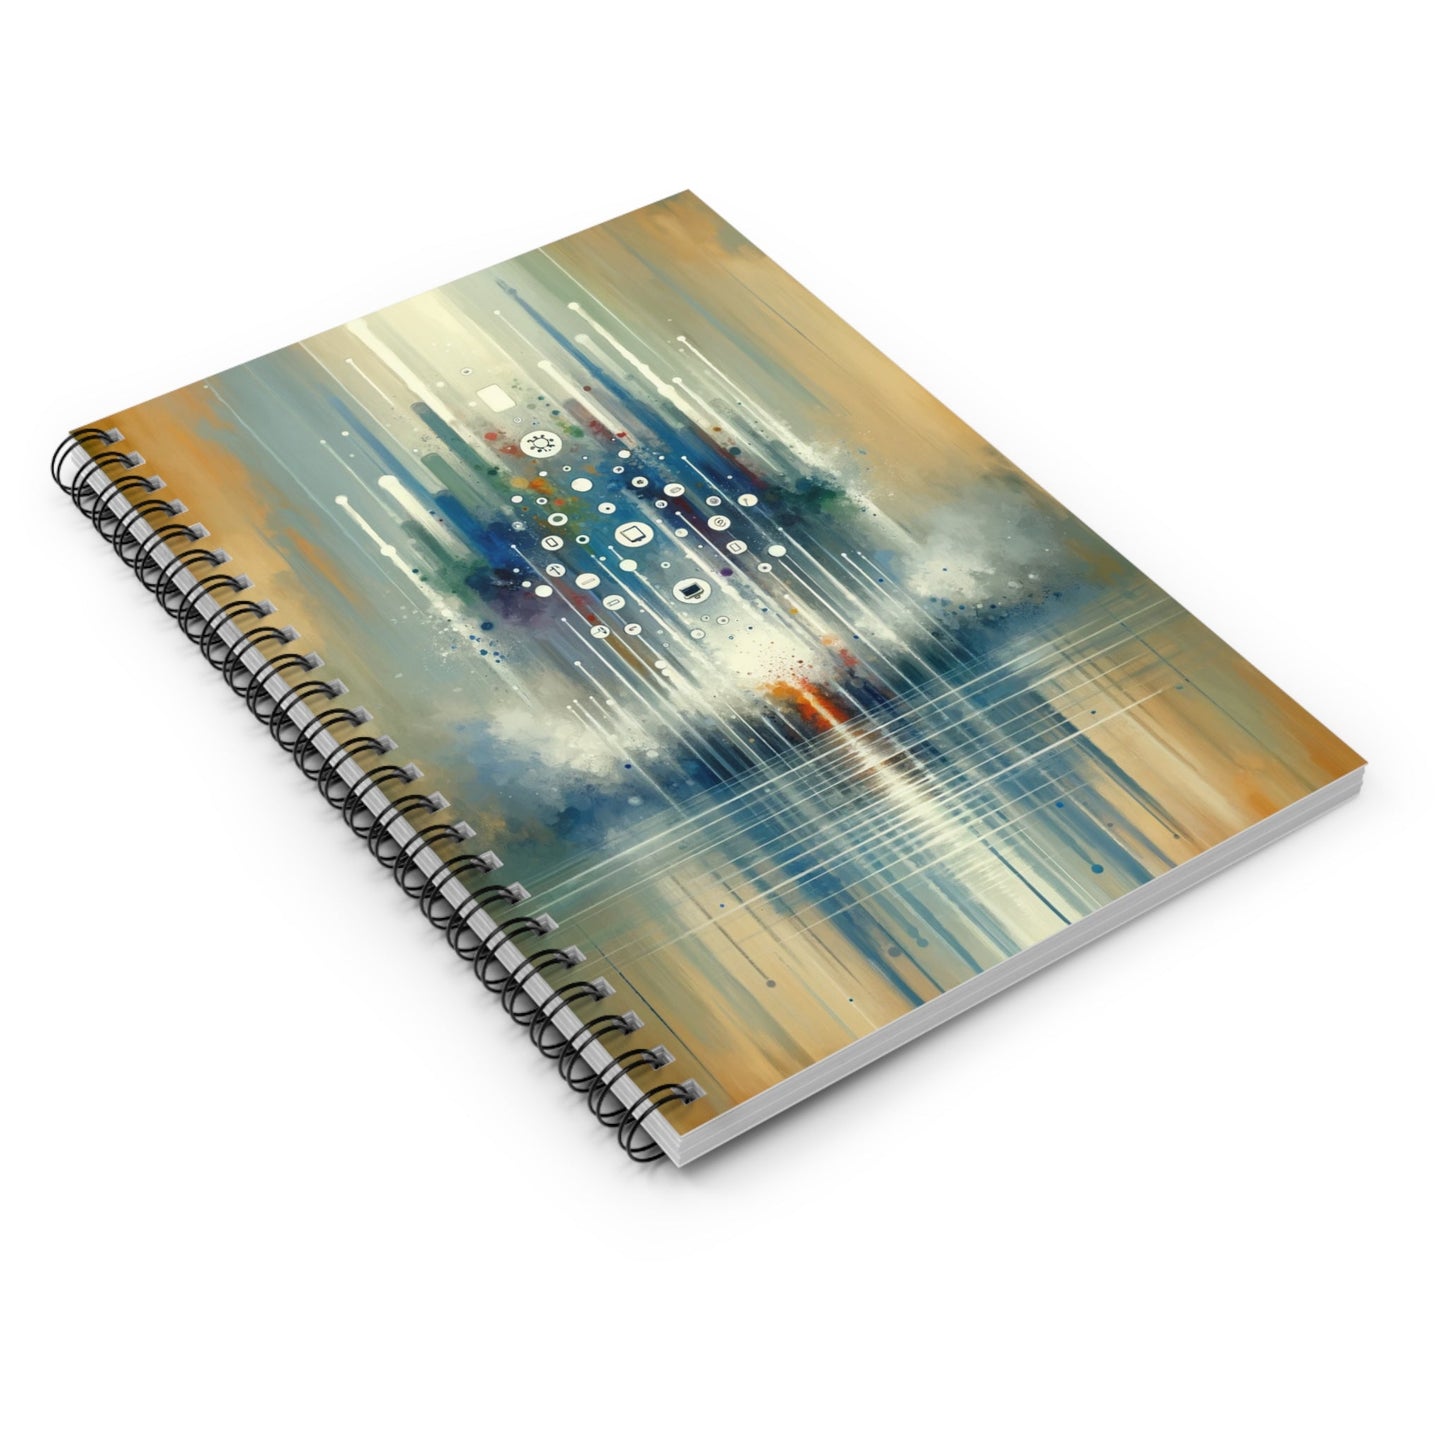 Tachism Digital Escape Spiral Notebook - Ruled Line - ATUH.ART